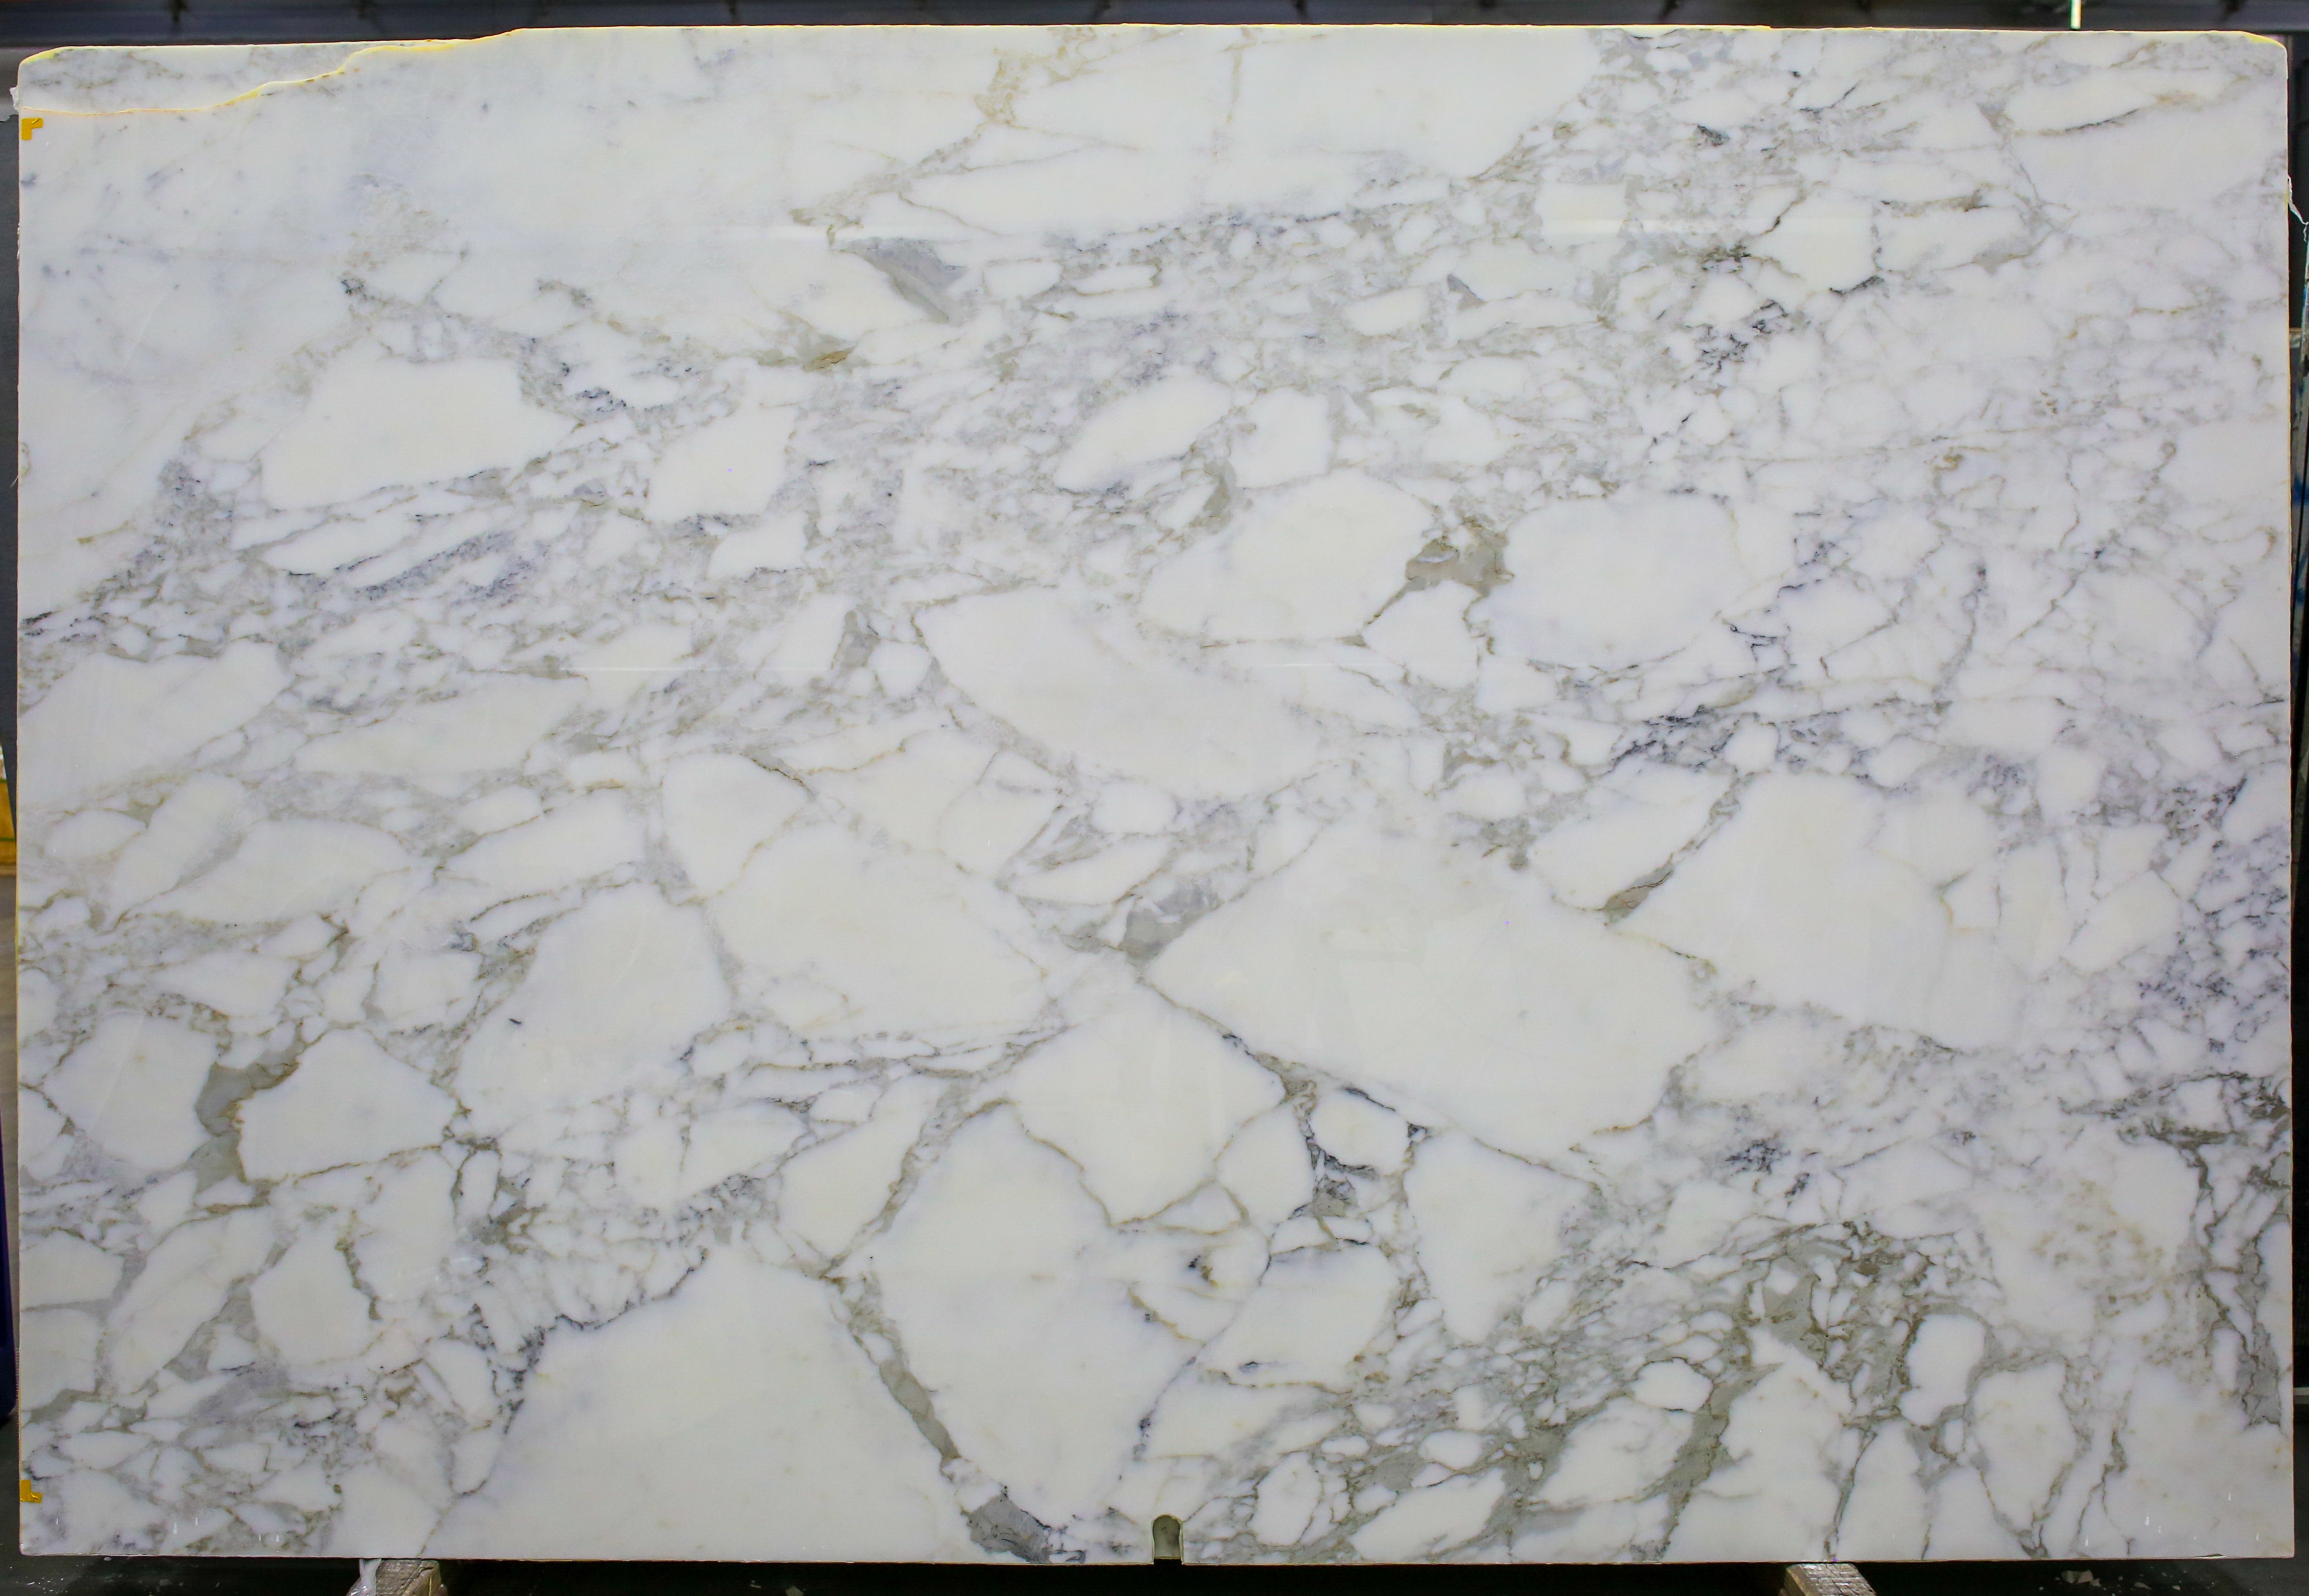  Calacatta Gold A2 Standard Marble Slab 3/4 - 21874#22 -  70X115 